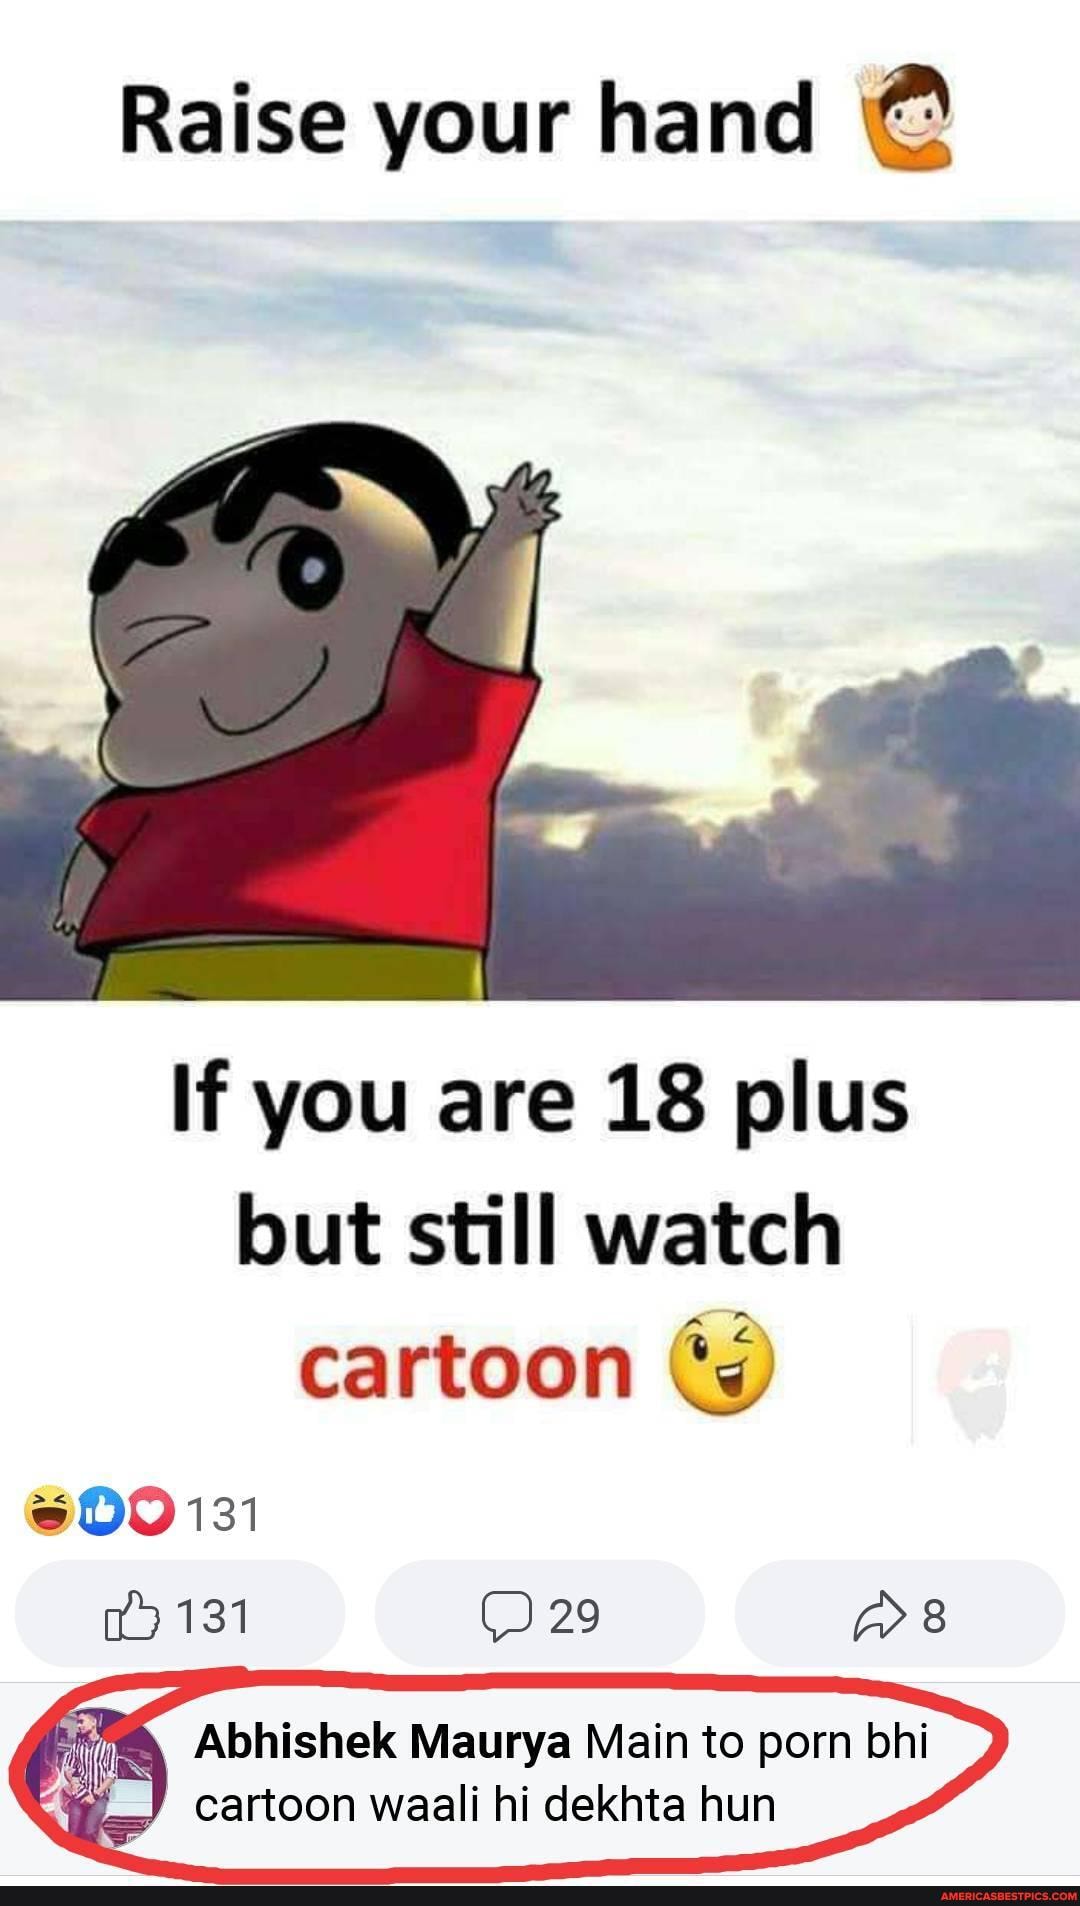 1080px x 1906px - Raise your hand If you are 18 plus but still watch cartoon 600131 131 29  Abhishek Maurya Main to porn bhi cartoon waali hi dekhta hun - seo.title